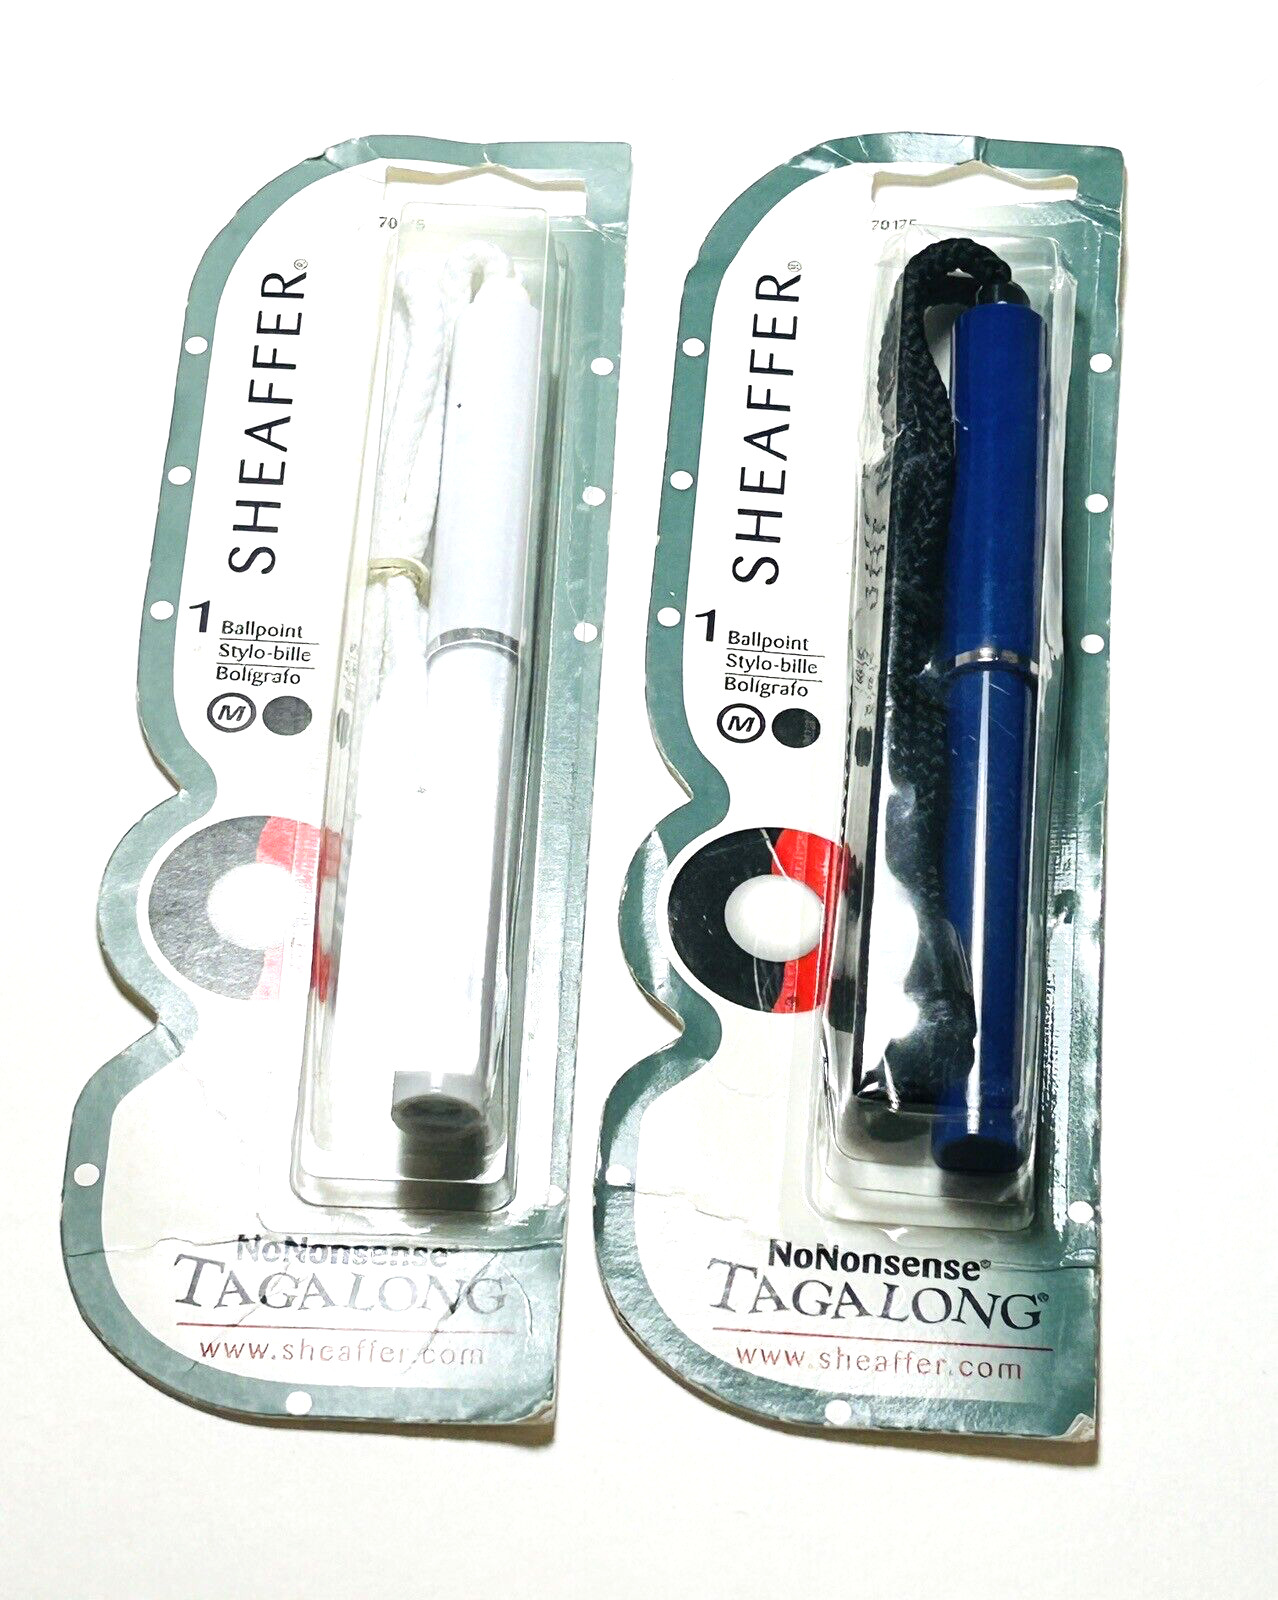 Sheaffer Pen No Nonsense Tagalong Ballpoint Hanging Blue & White Lot Of 2 Pens